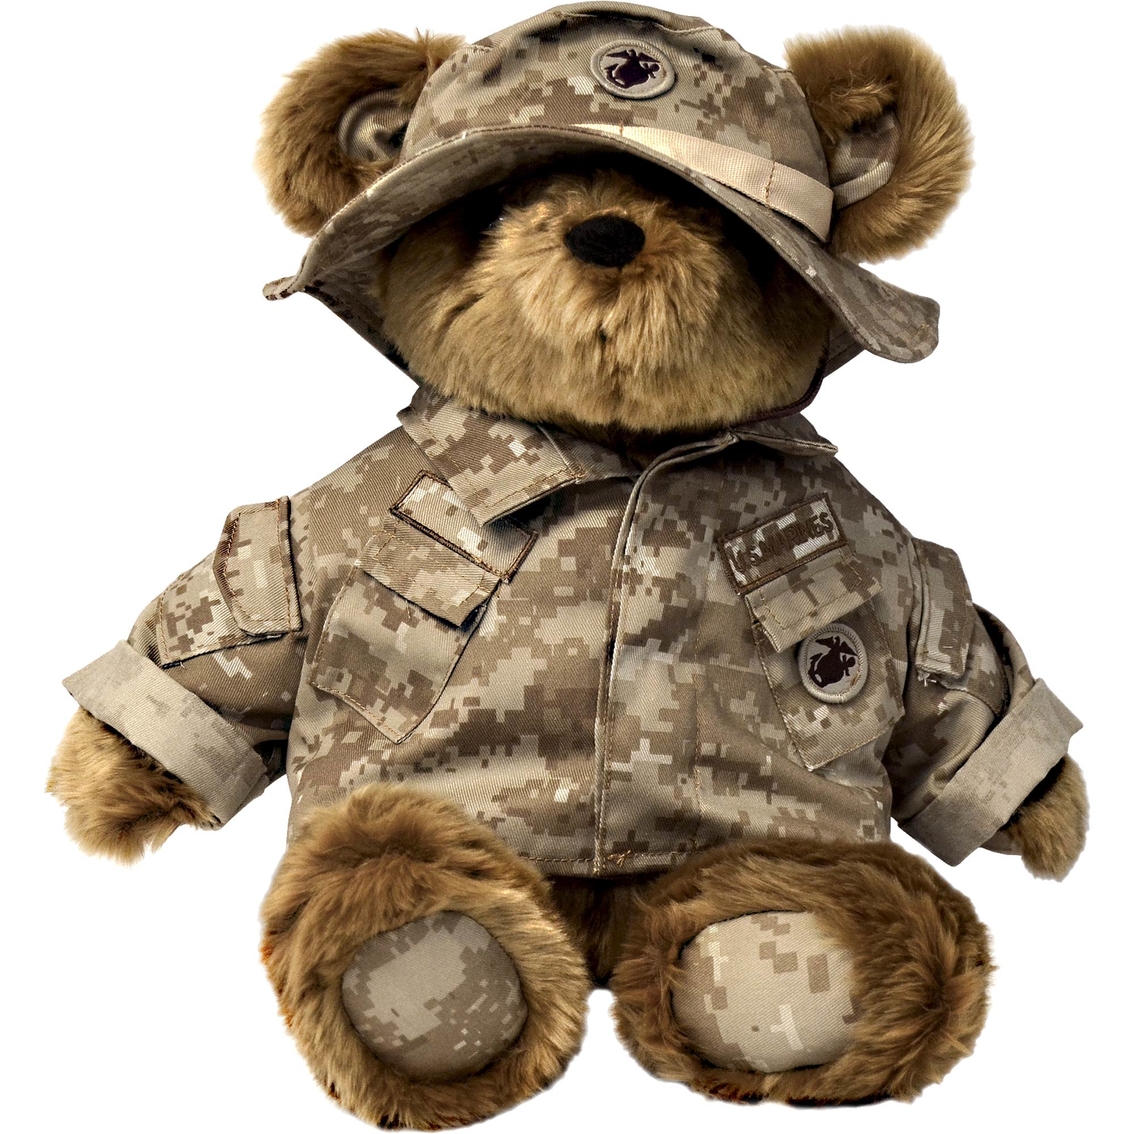 Bear Forces of America Marine Corps Woodland Marpat Uniform Plush Bear 16 in.